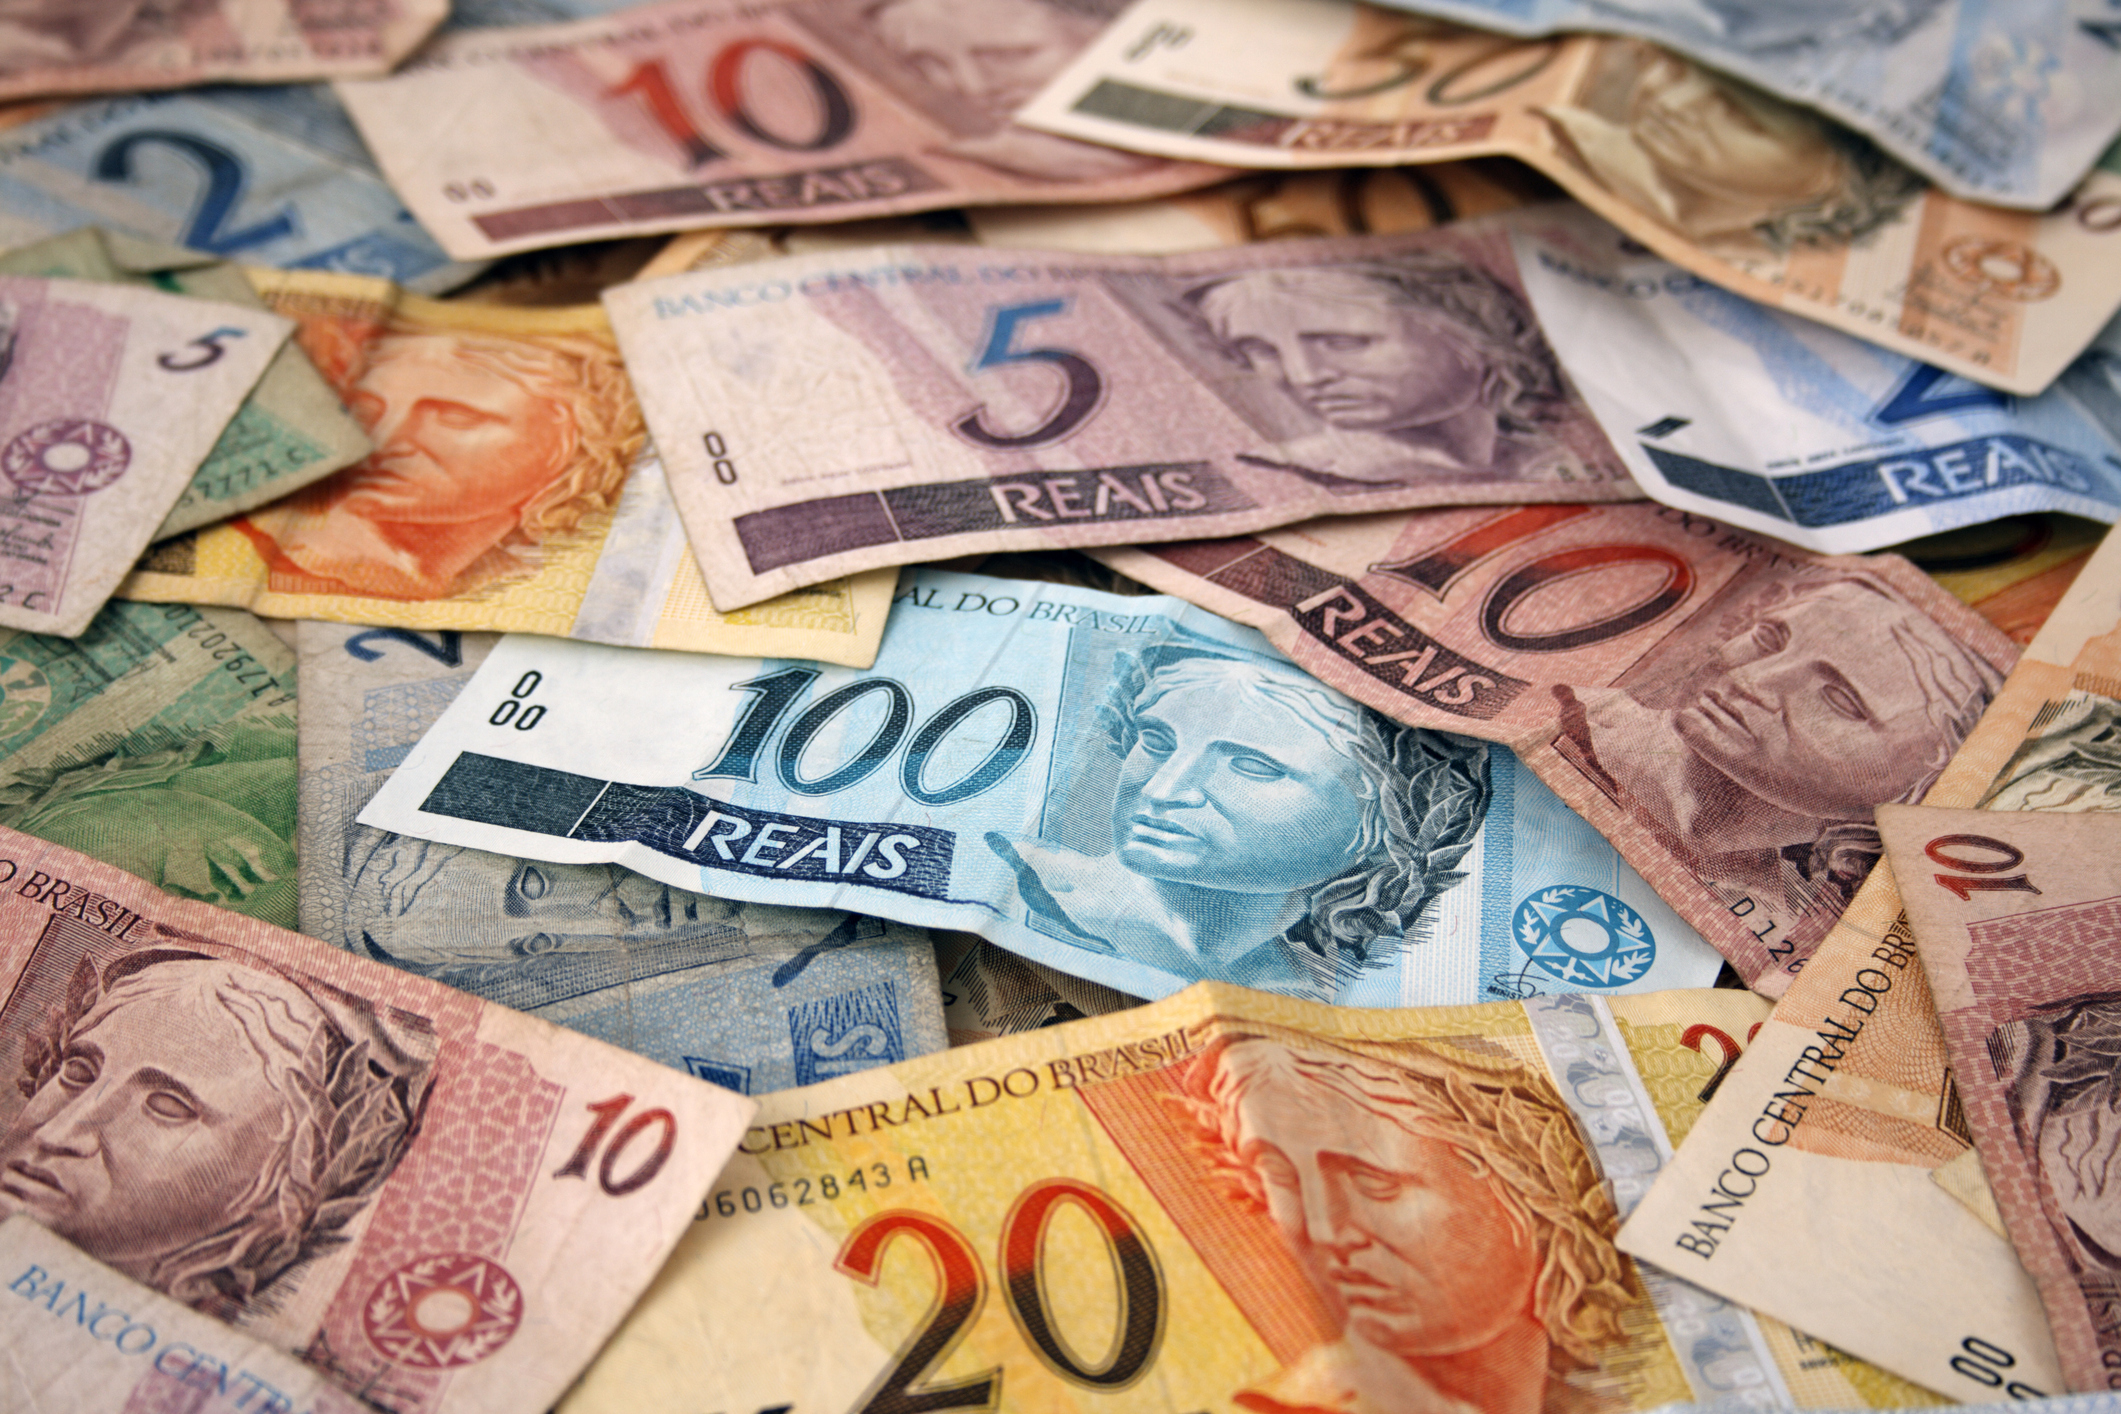 Brazilian money background. Bills called Reais (Real).